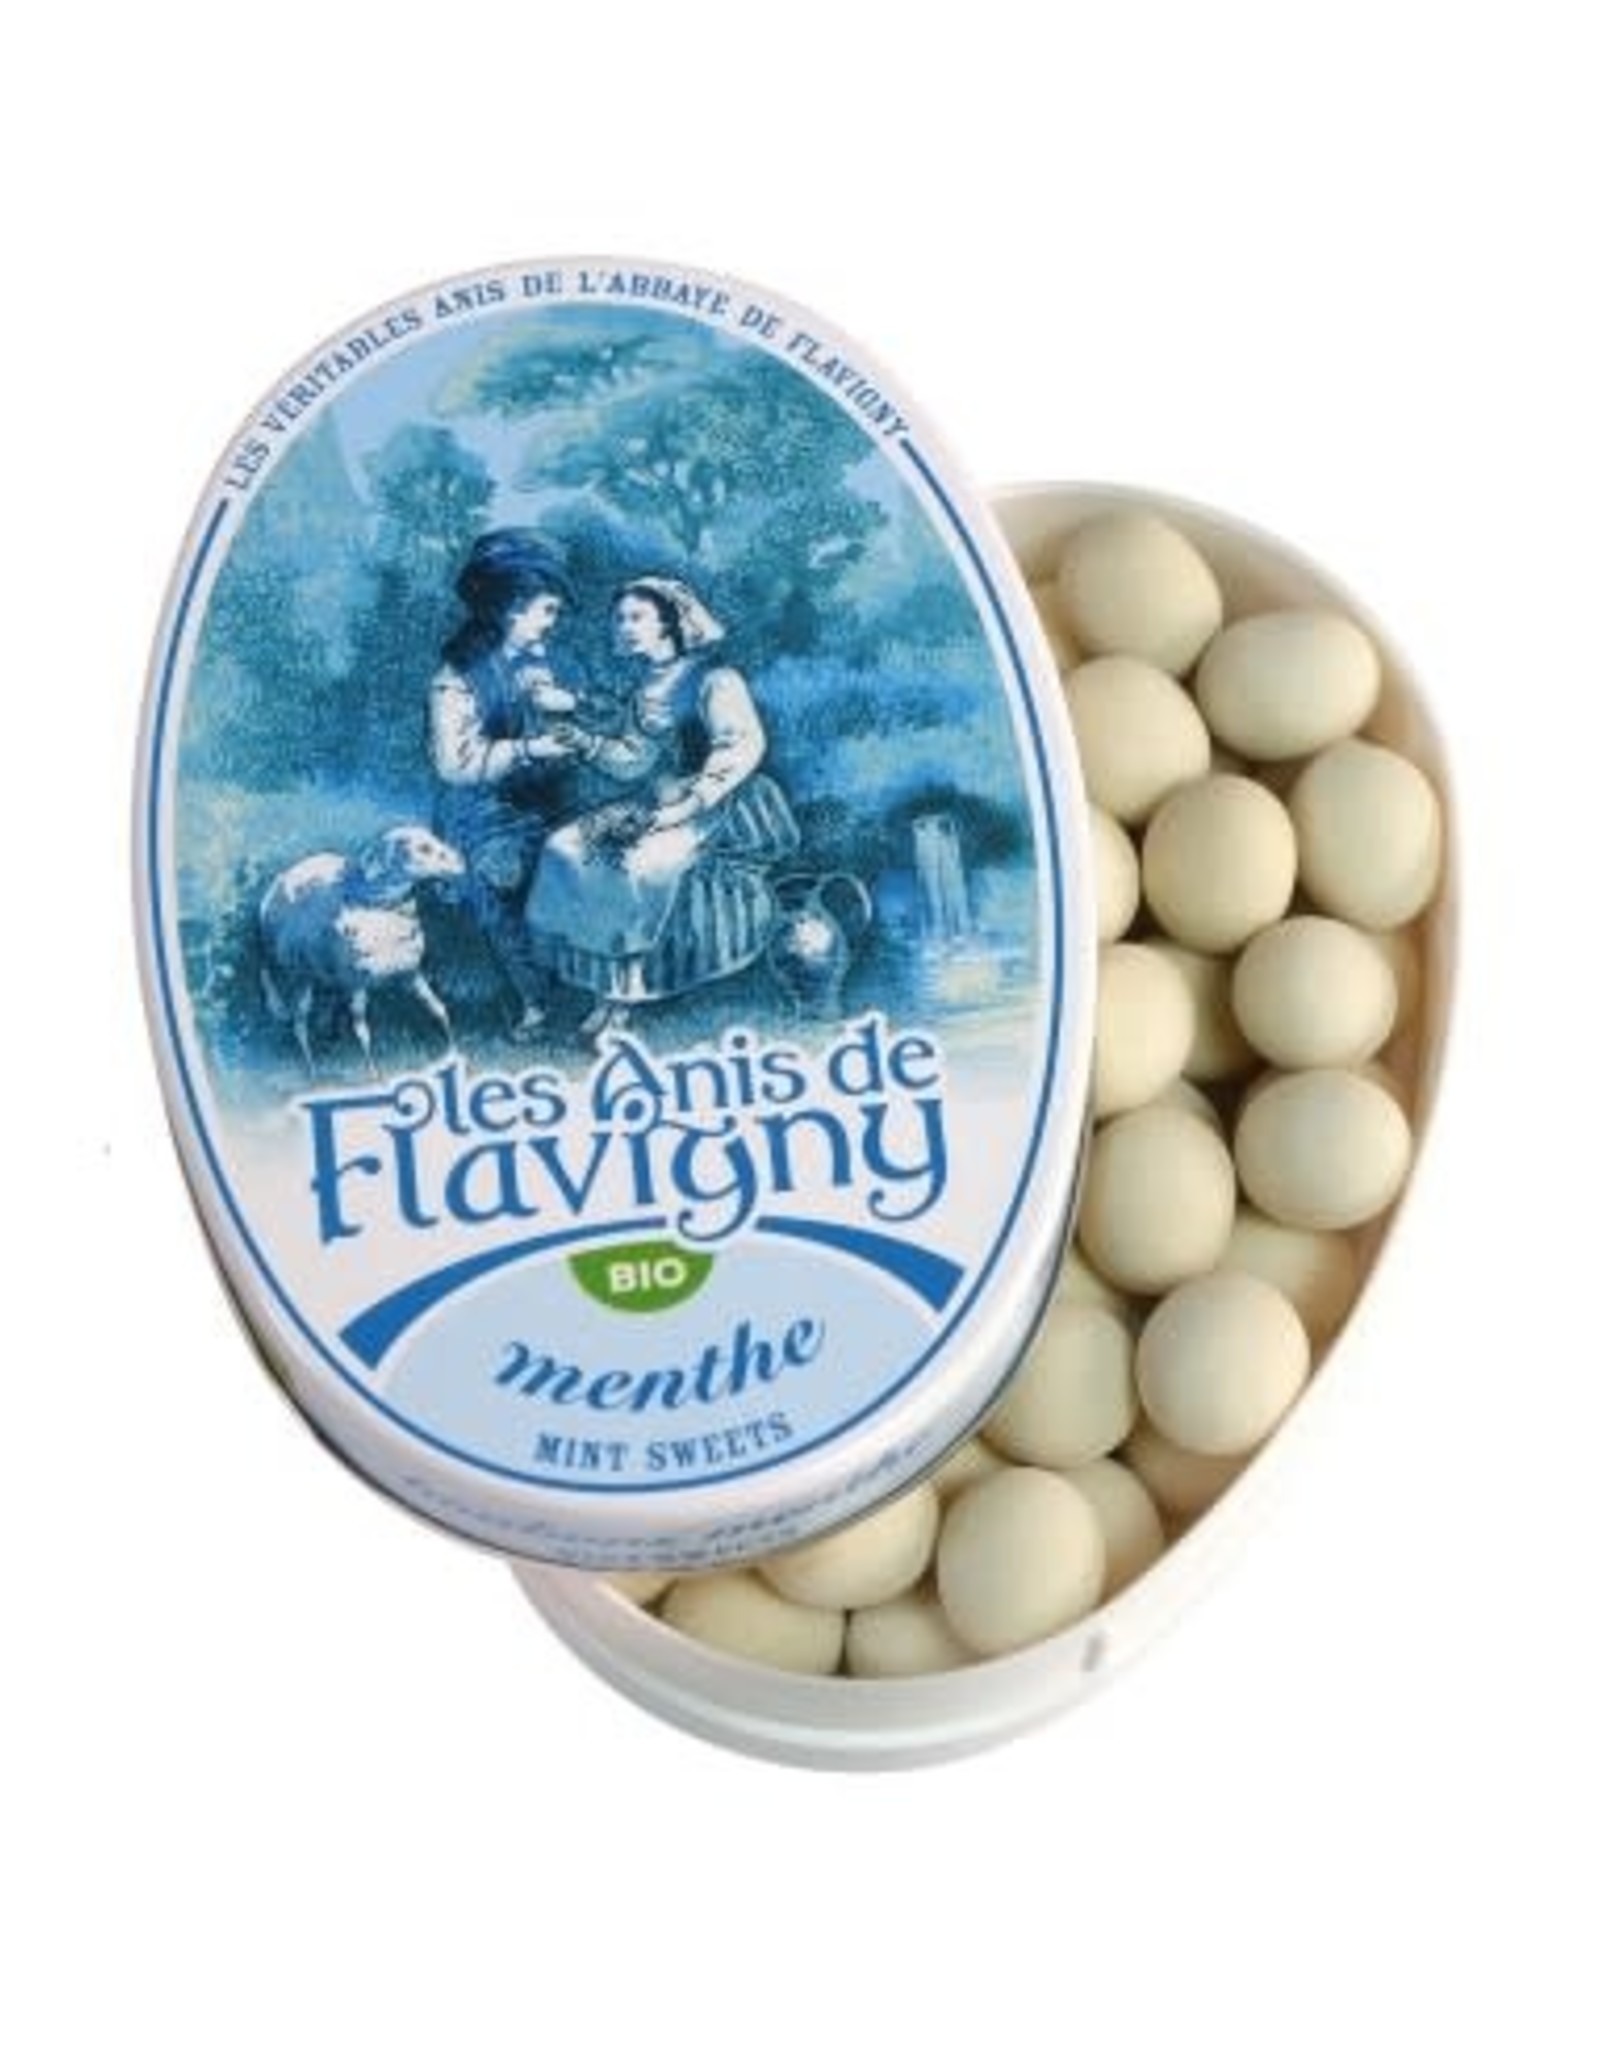 Anis De Flavigny Pastilles Tin - Mint